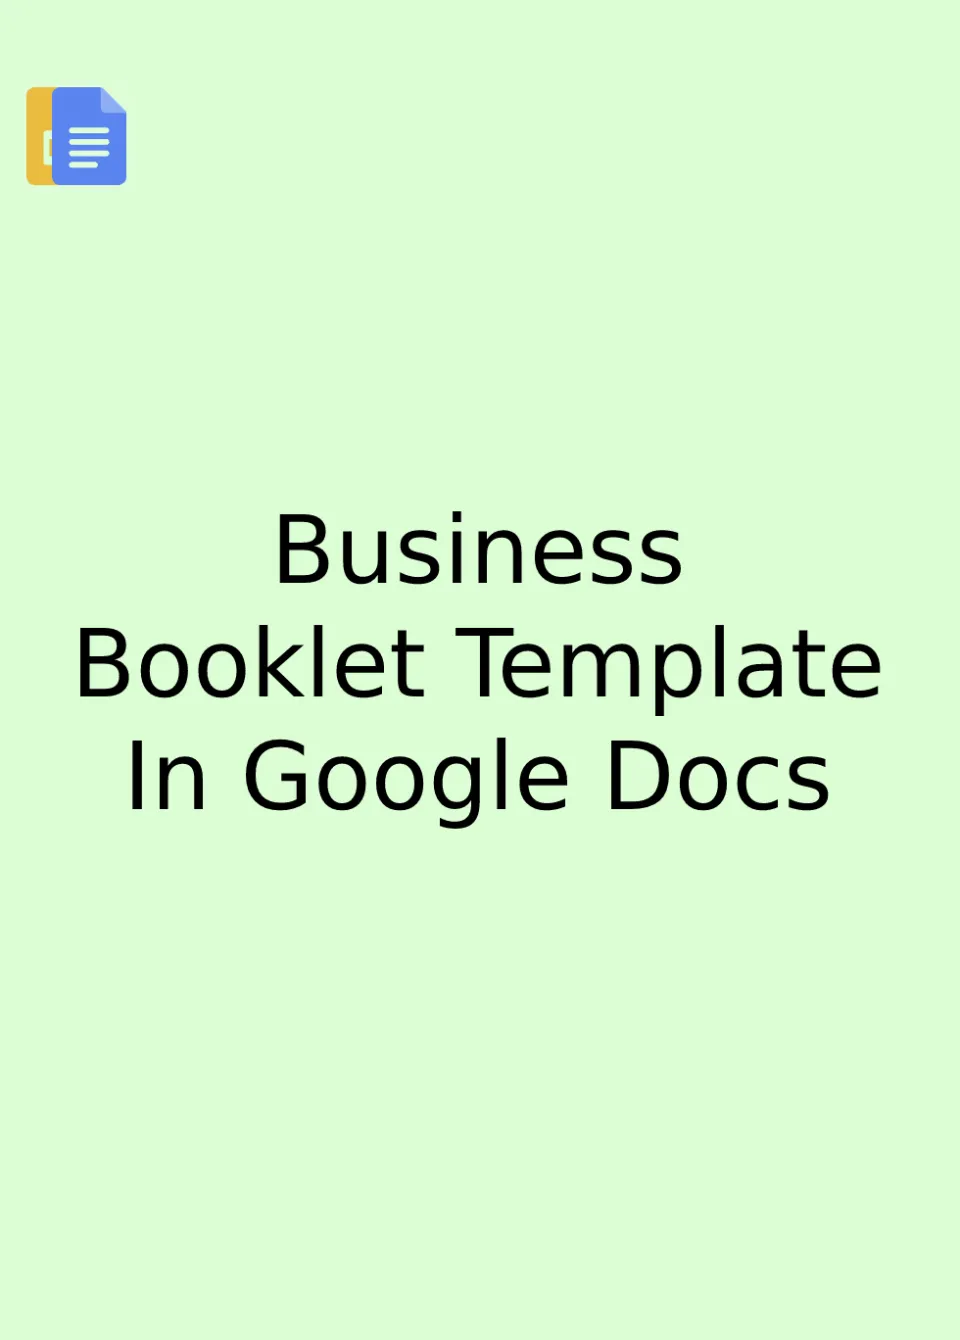 Business Booklet Template Google Docs